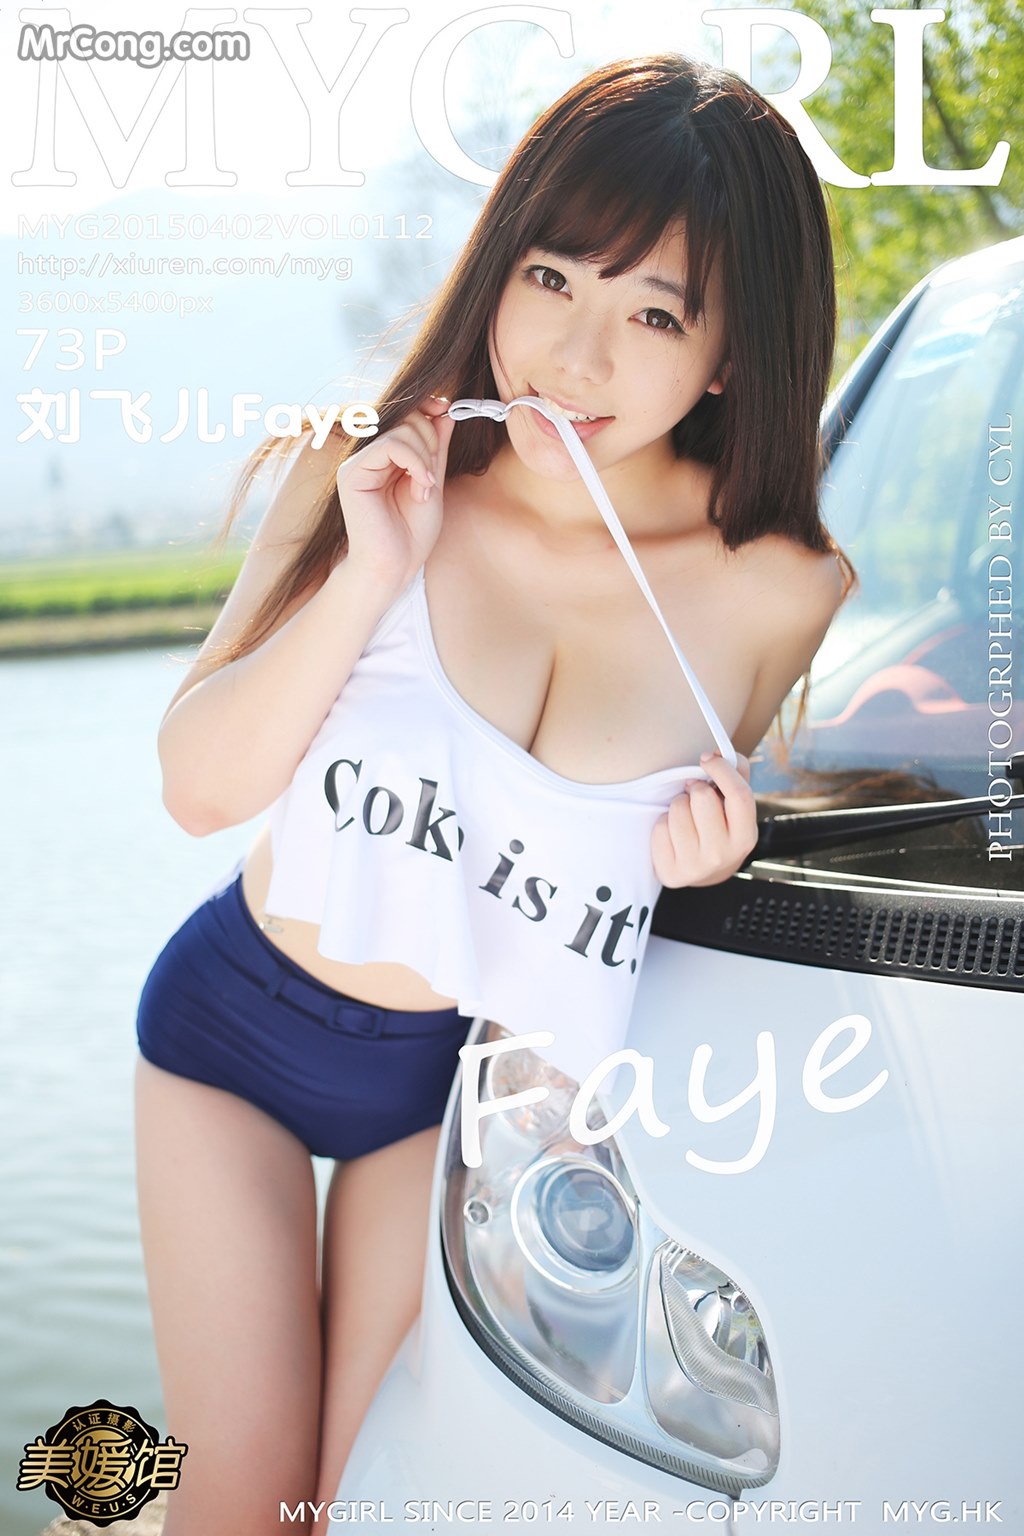 MyGirl Vol.112: Faye Model (刘 飞儿) (74 photos) photo 1-0